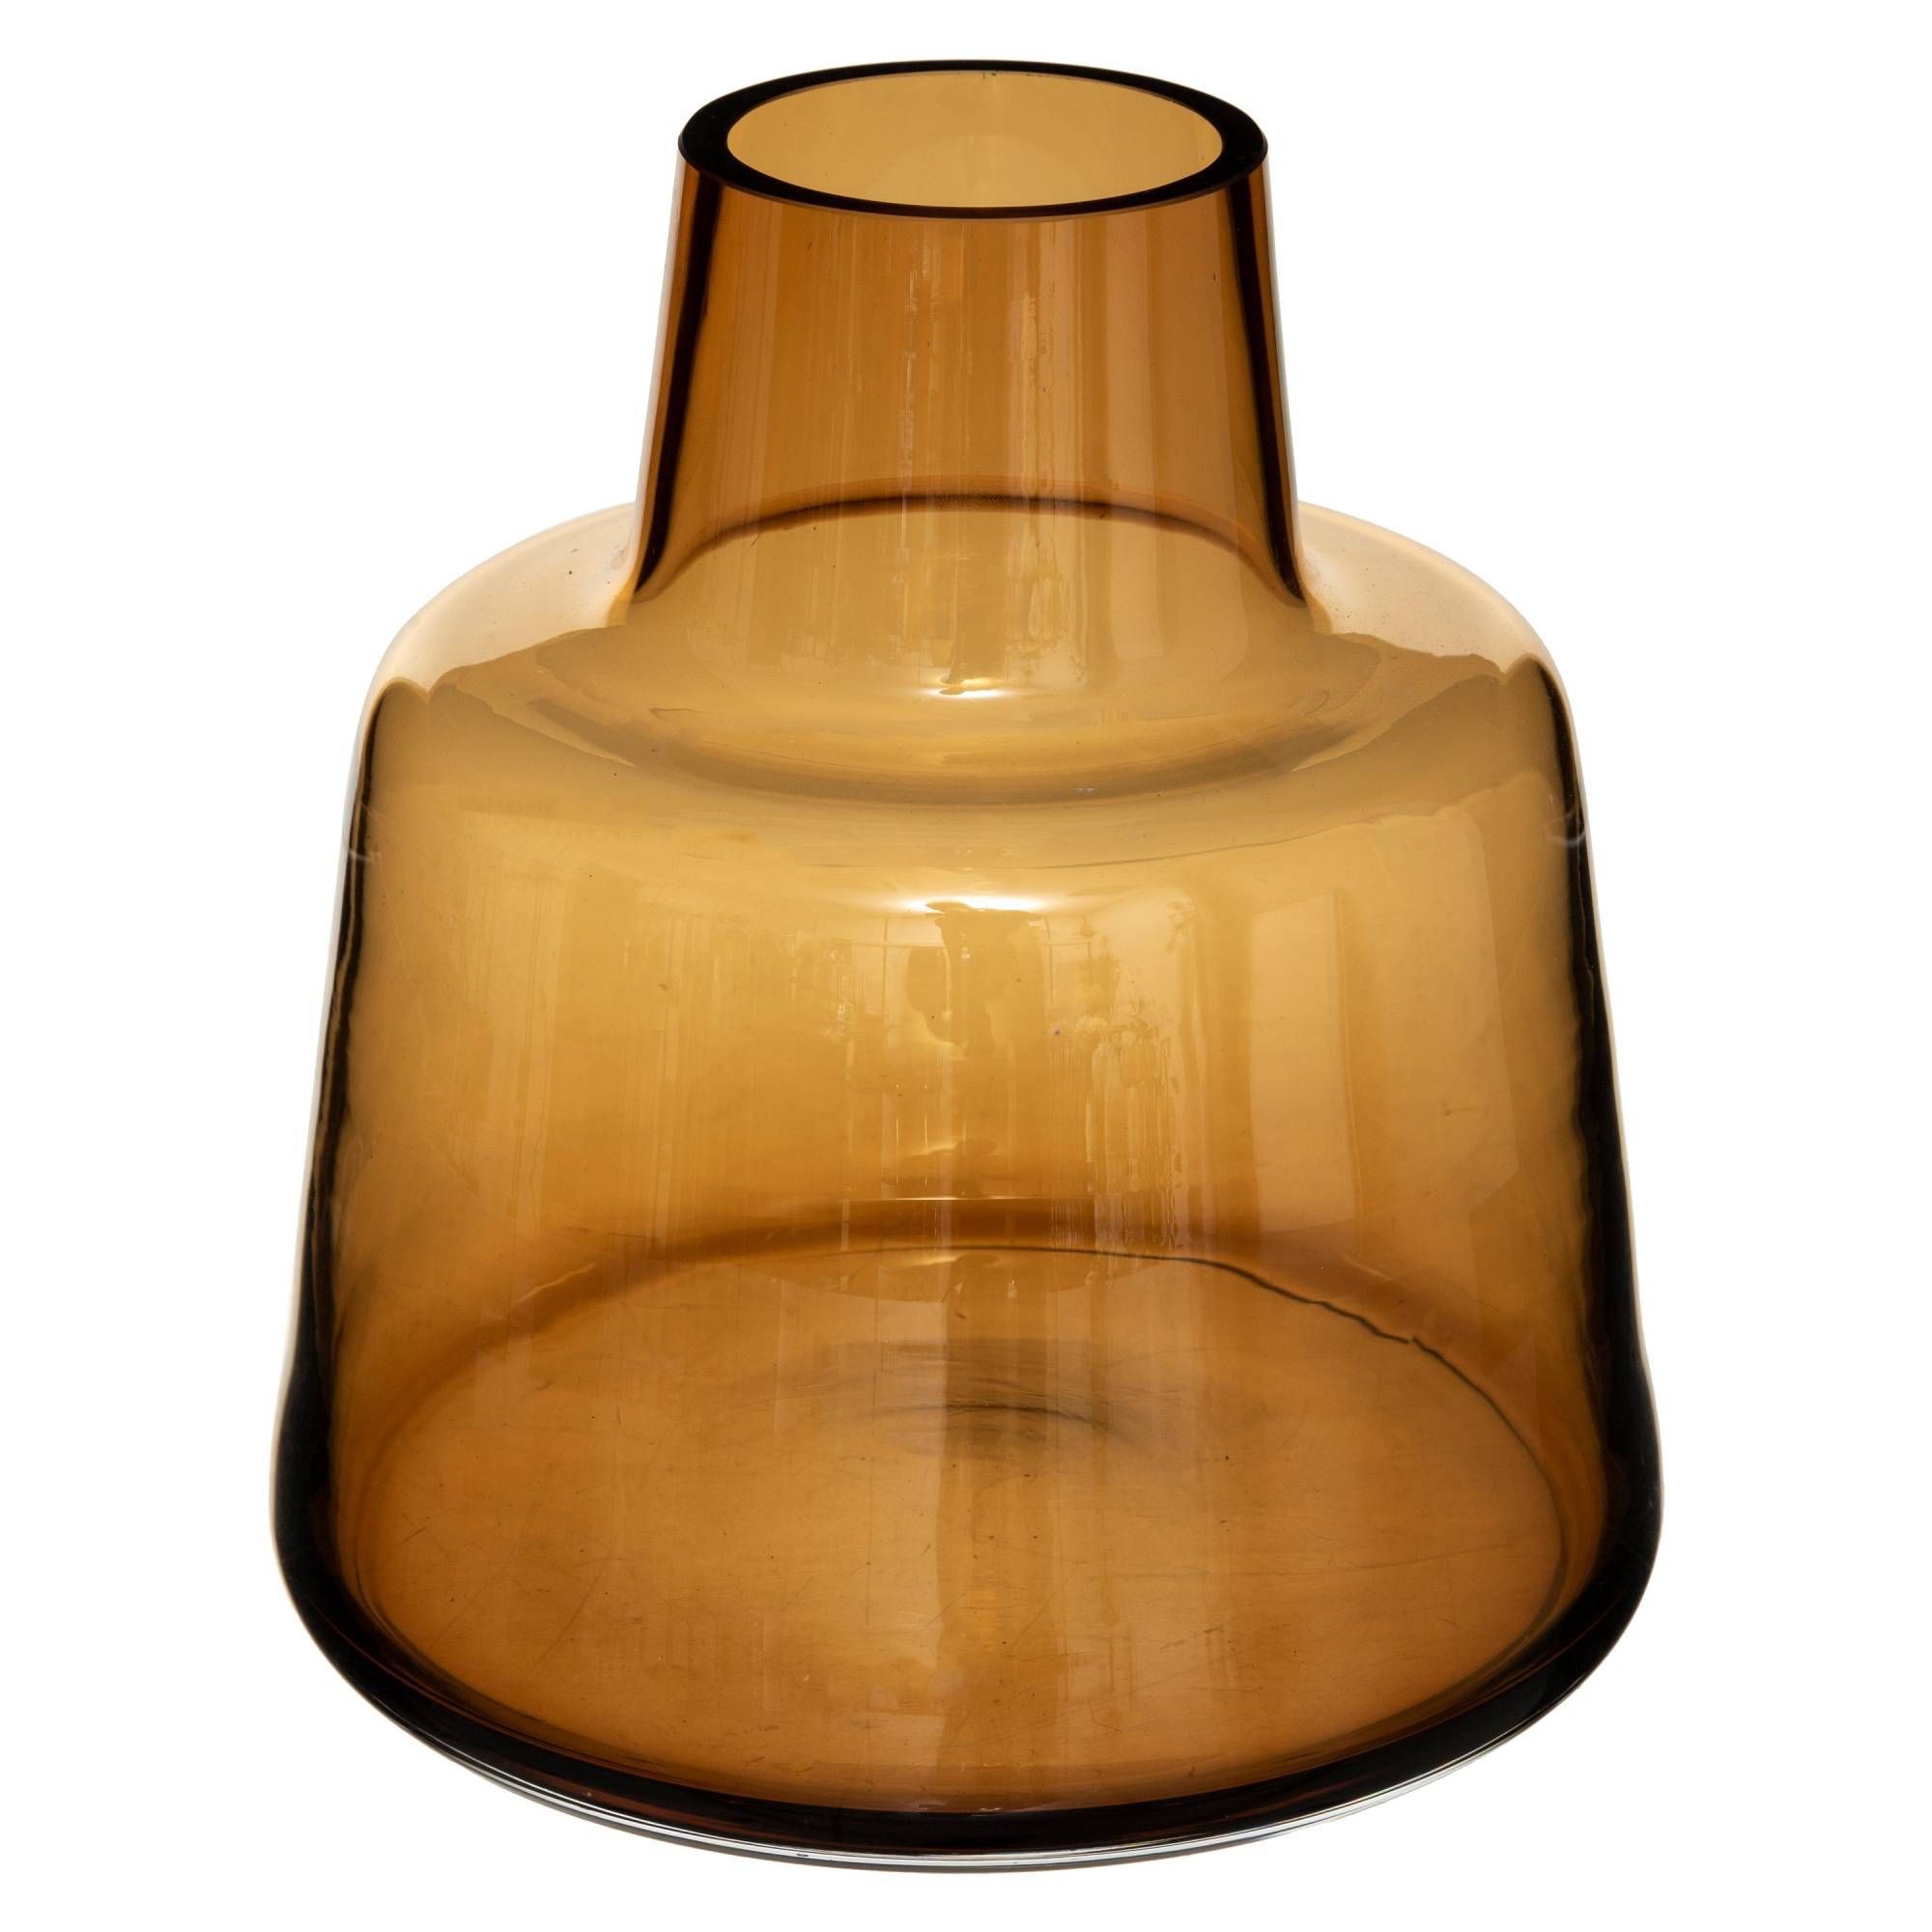 Atmosphera Skleněná váza, O 22 x 23 cm, jantarová barva - EMAKO.CZ s.r.o.